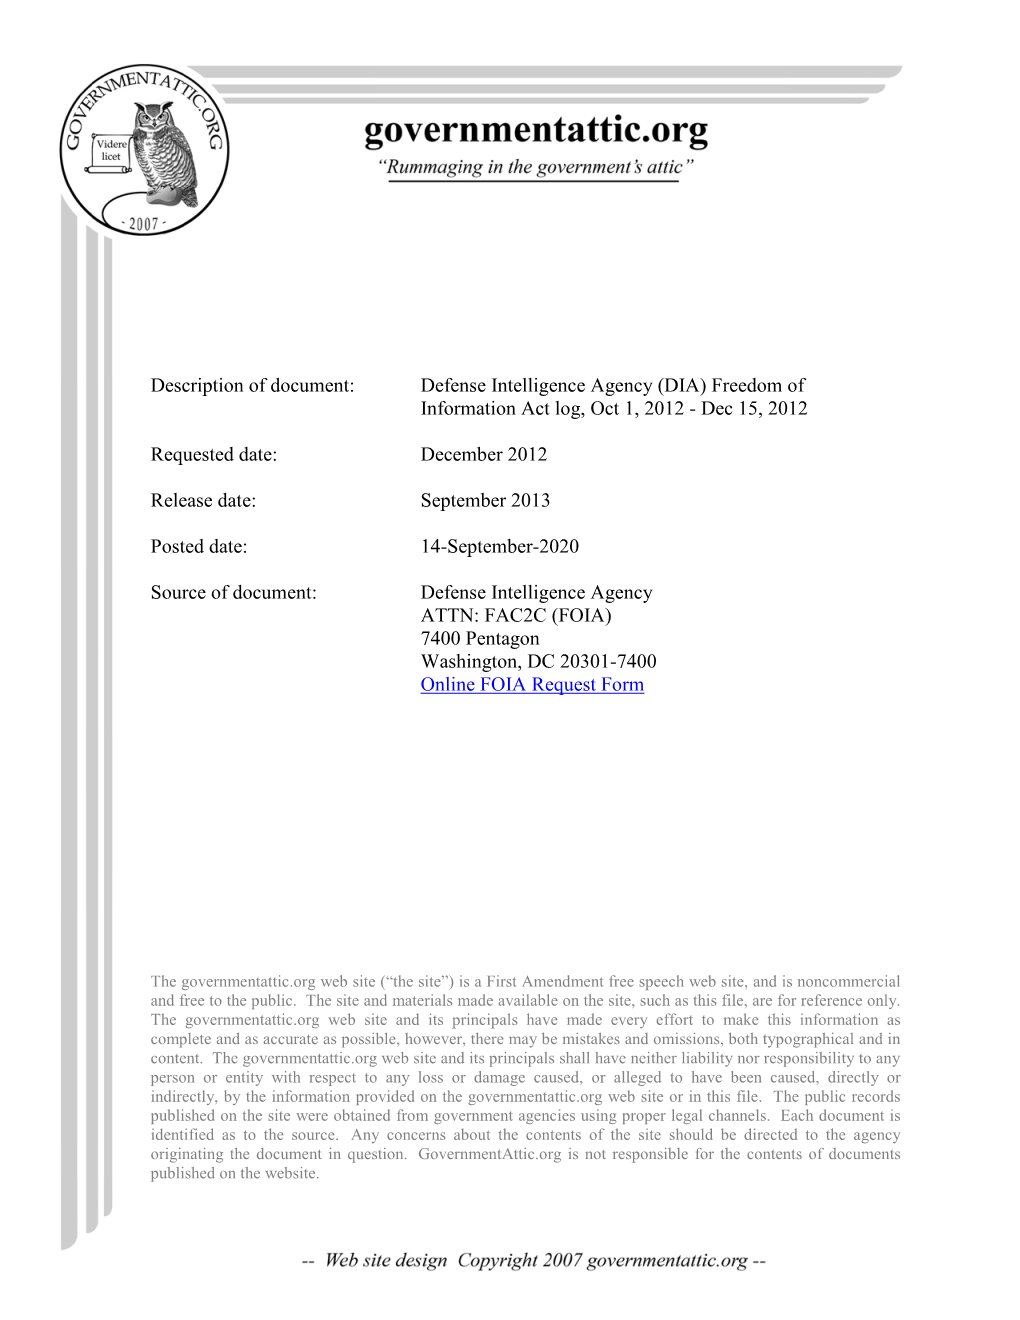 Defense Intelligence Agency (DIA) Freedom of Information Act Log, Oct 1, 2012 - Dec 15, 2012